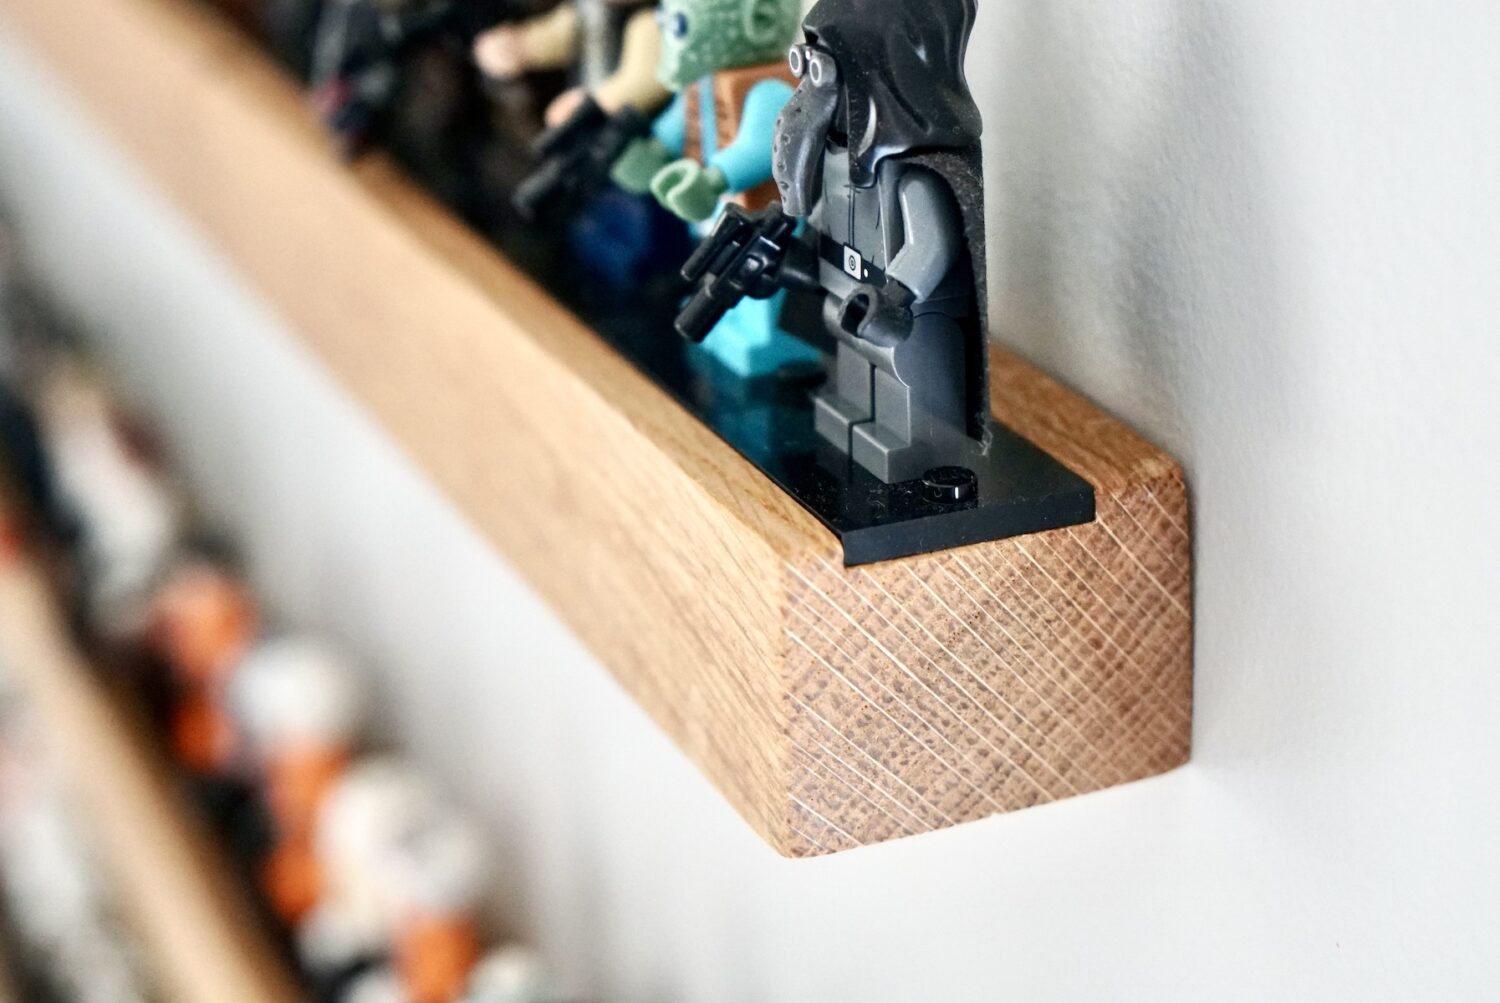 lego-mini-figure-display-wall-storage-stands